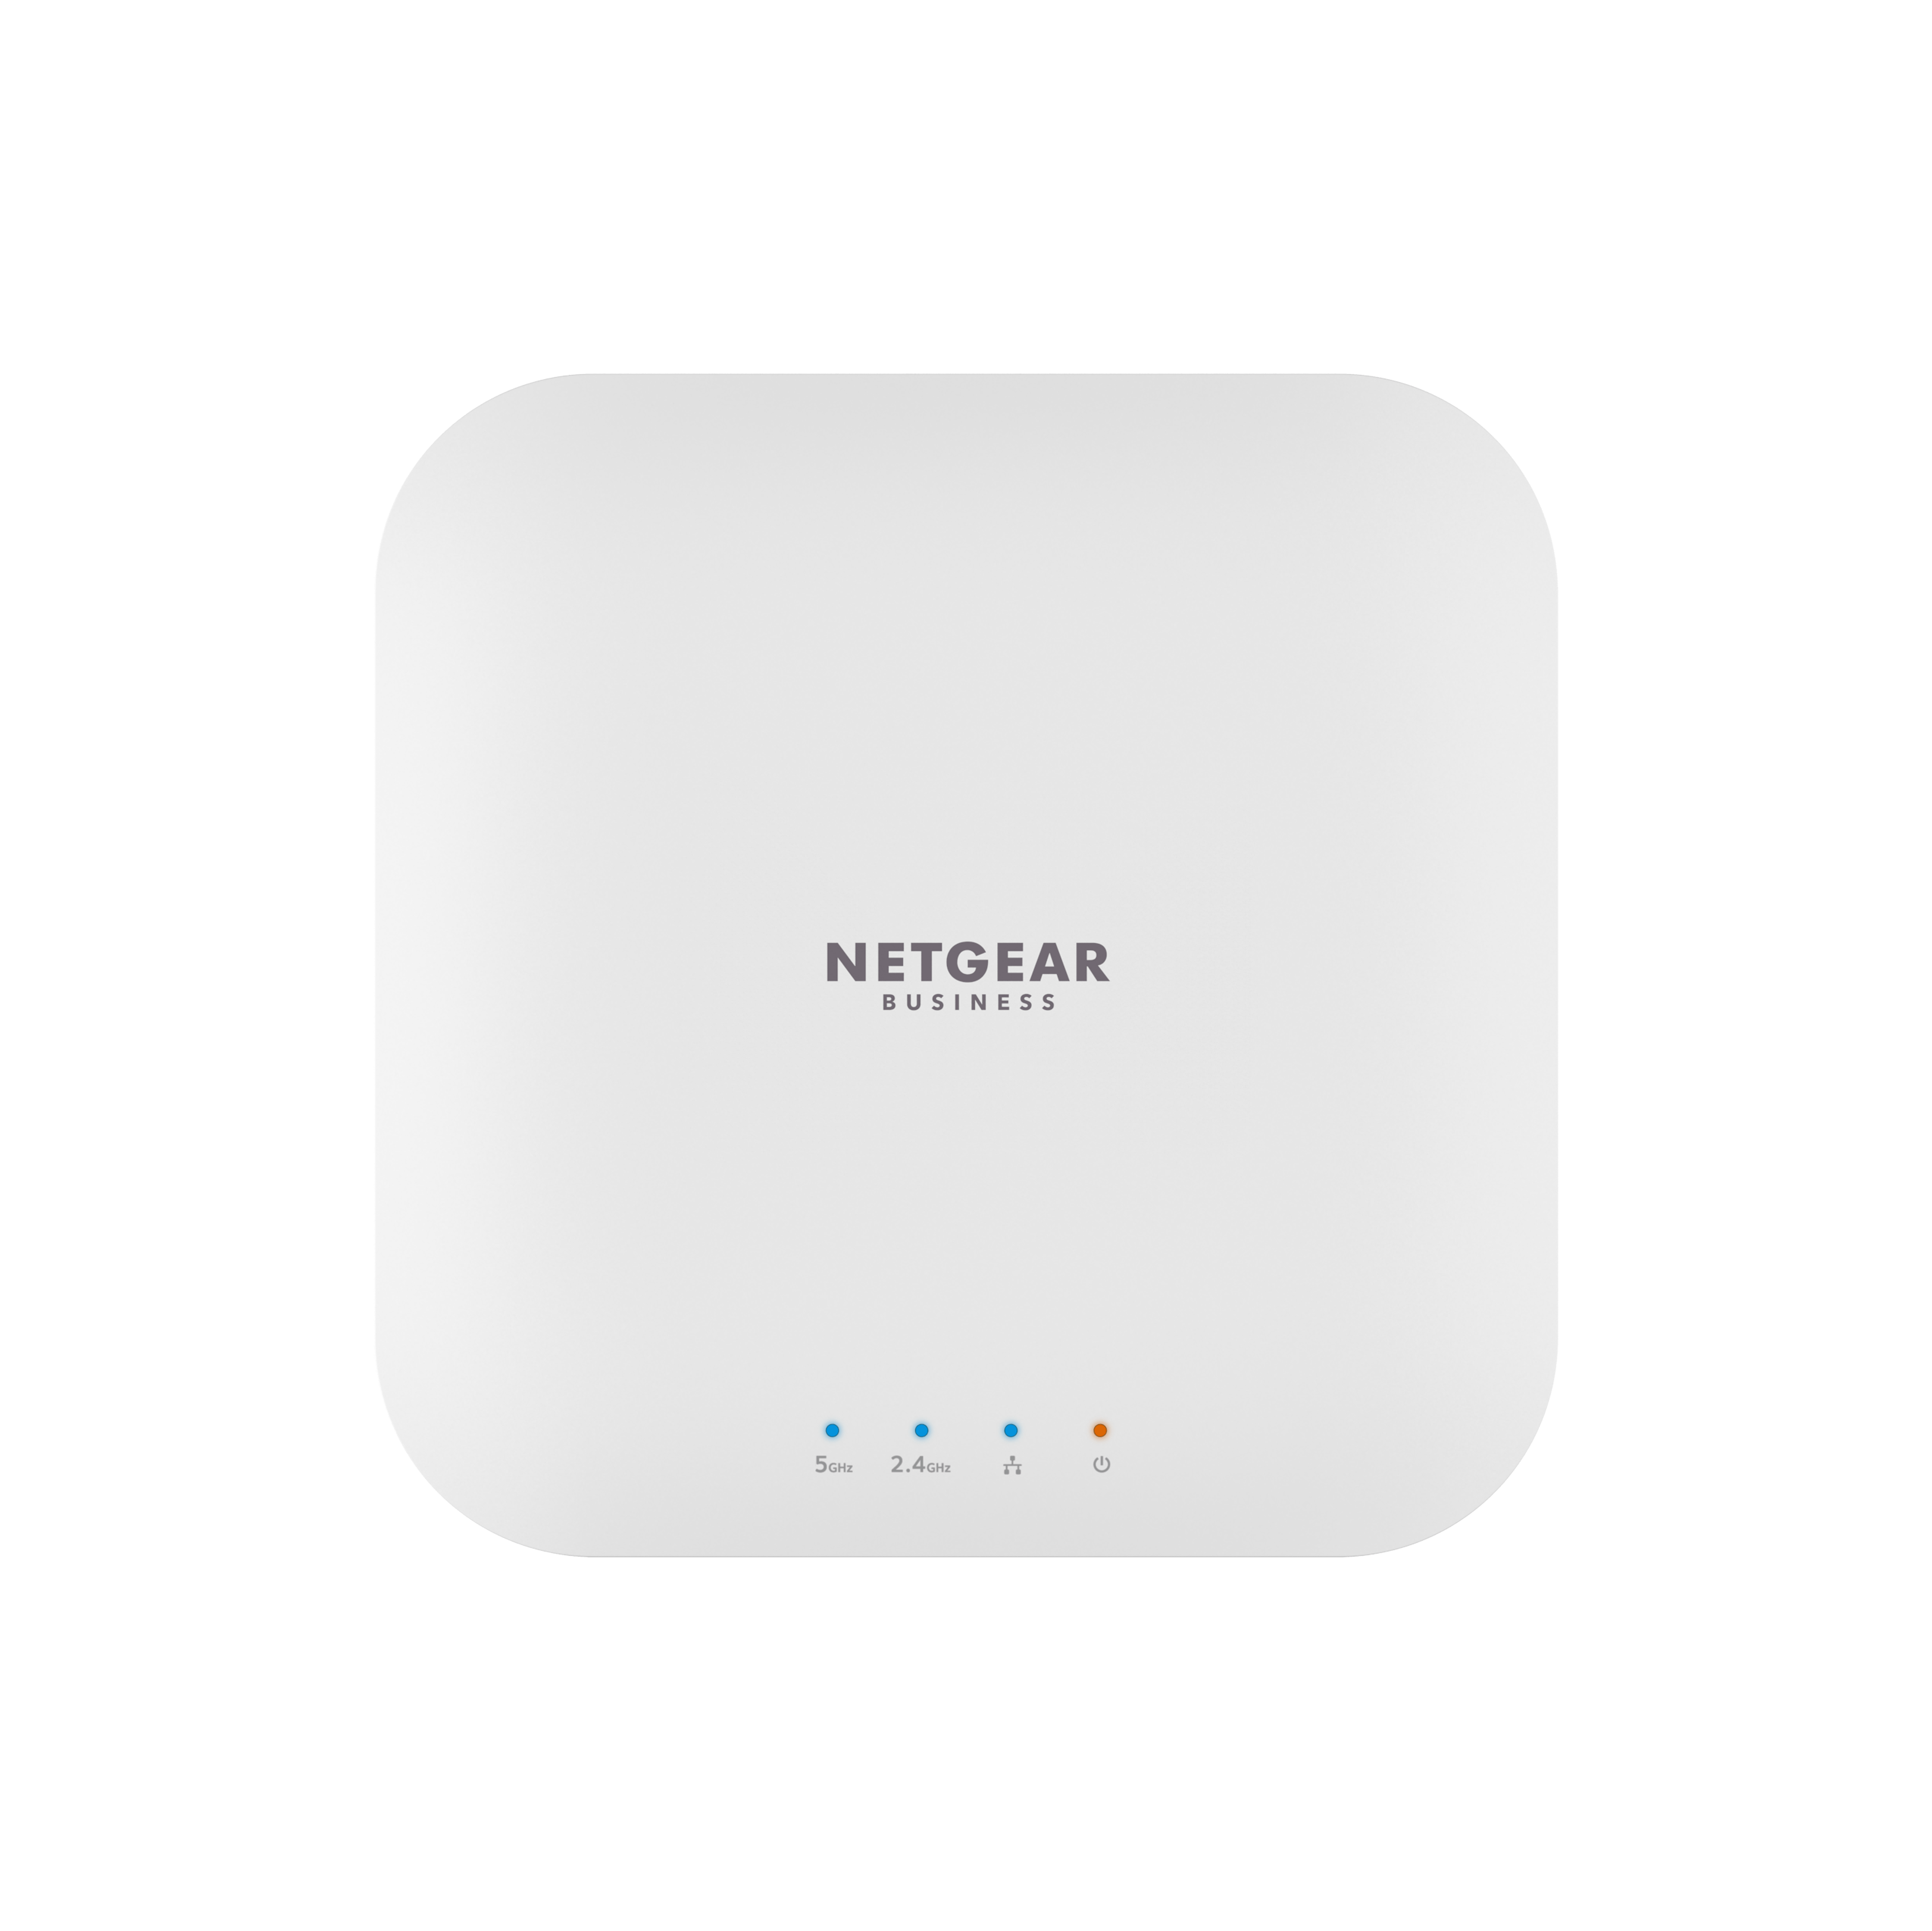 NETGEAR Wireless Access Point